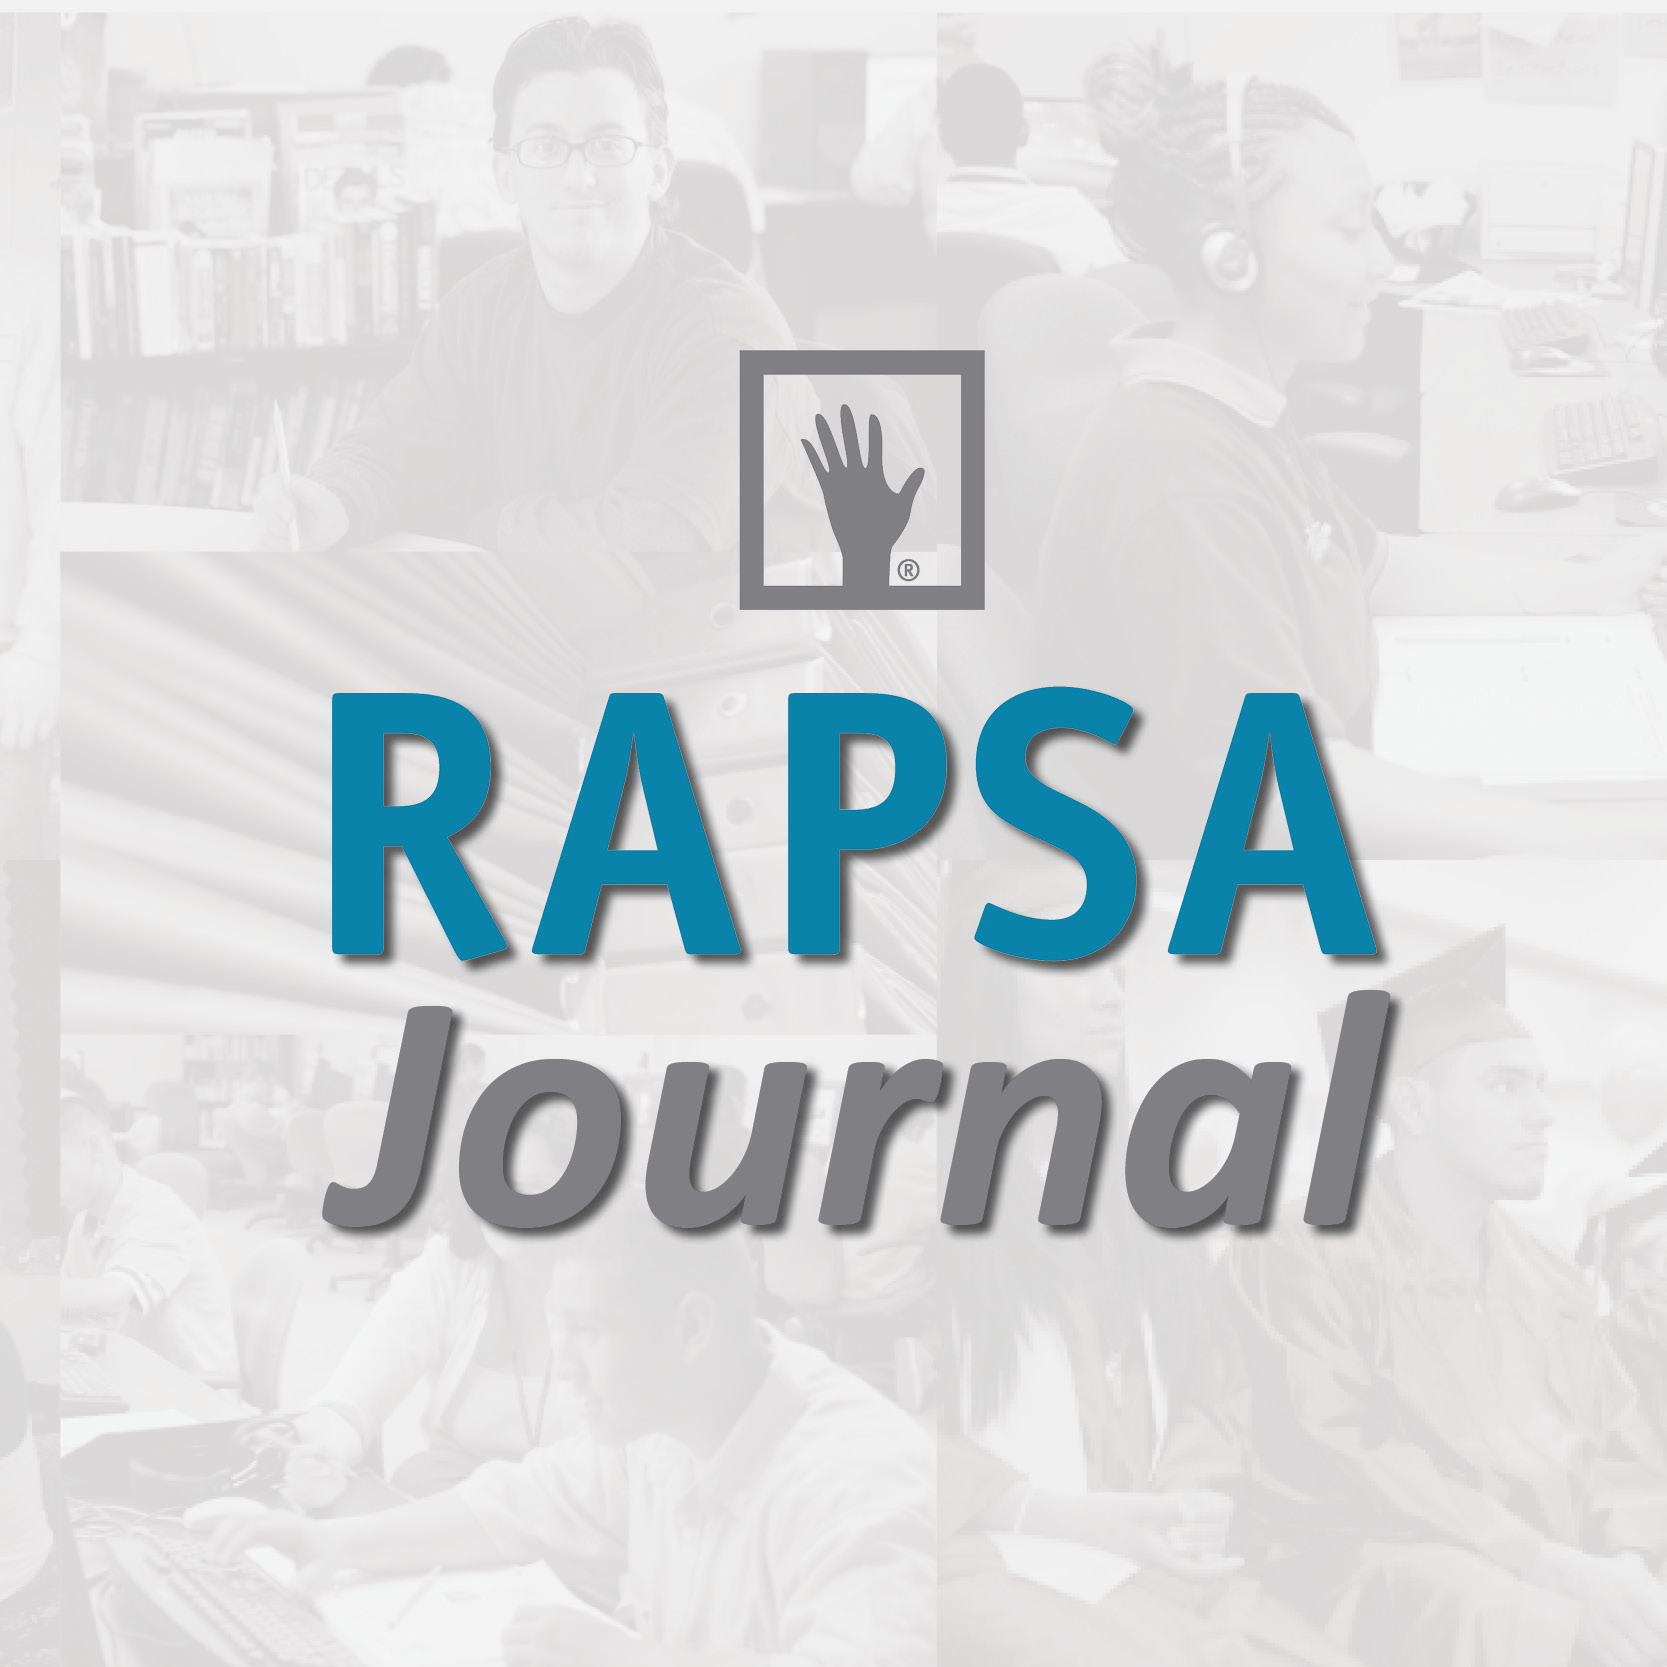 RAPSA Journal